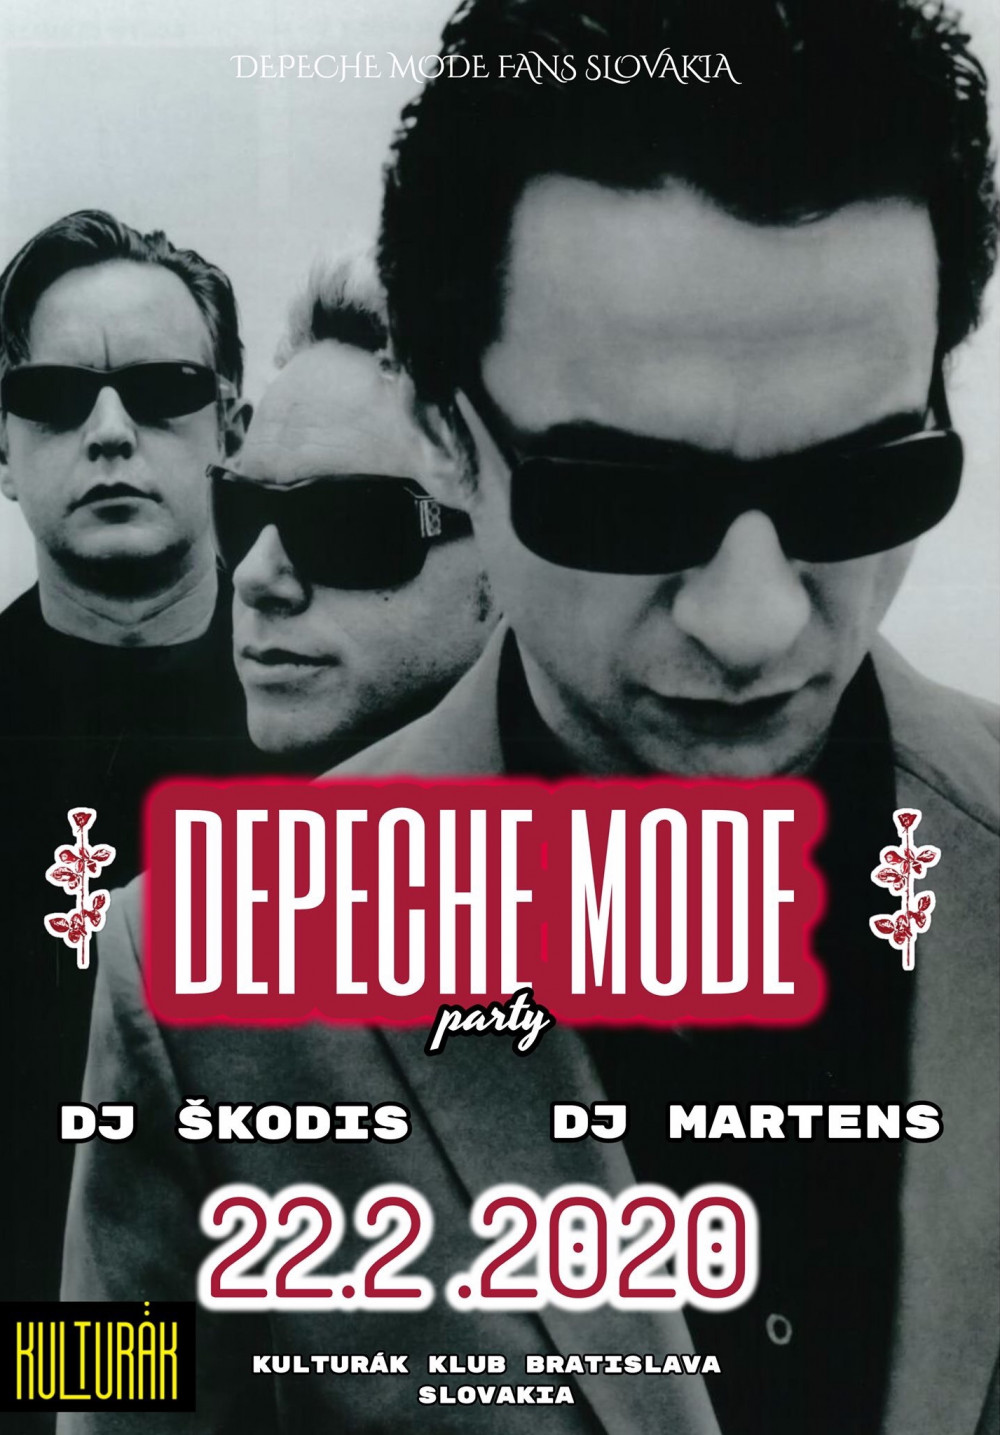 Plagát akcie: Depeche MODE party